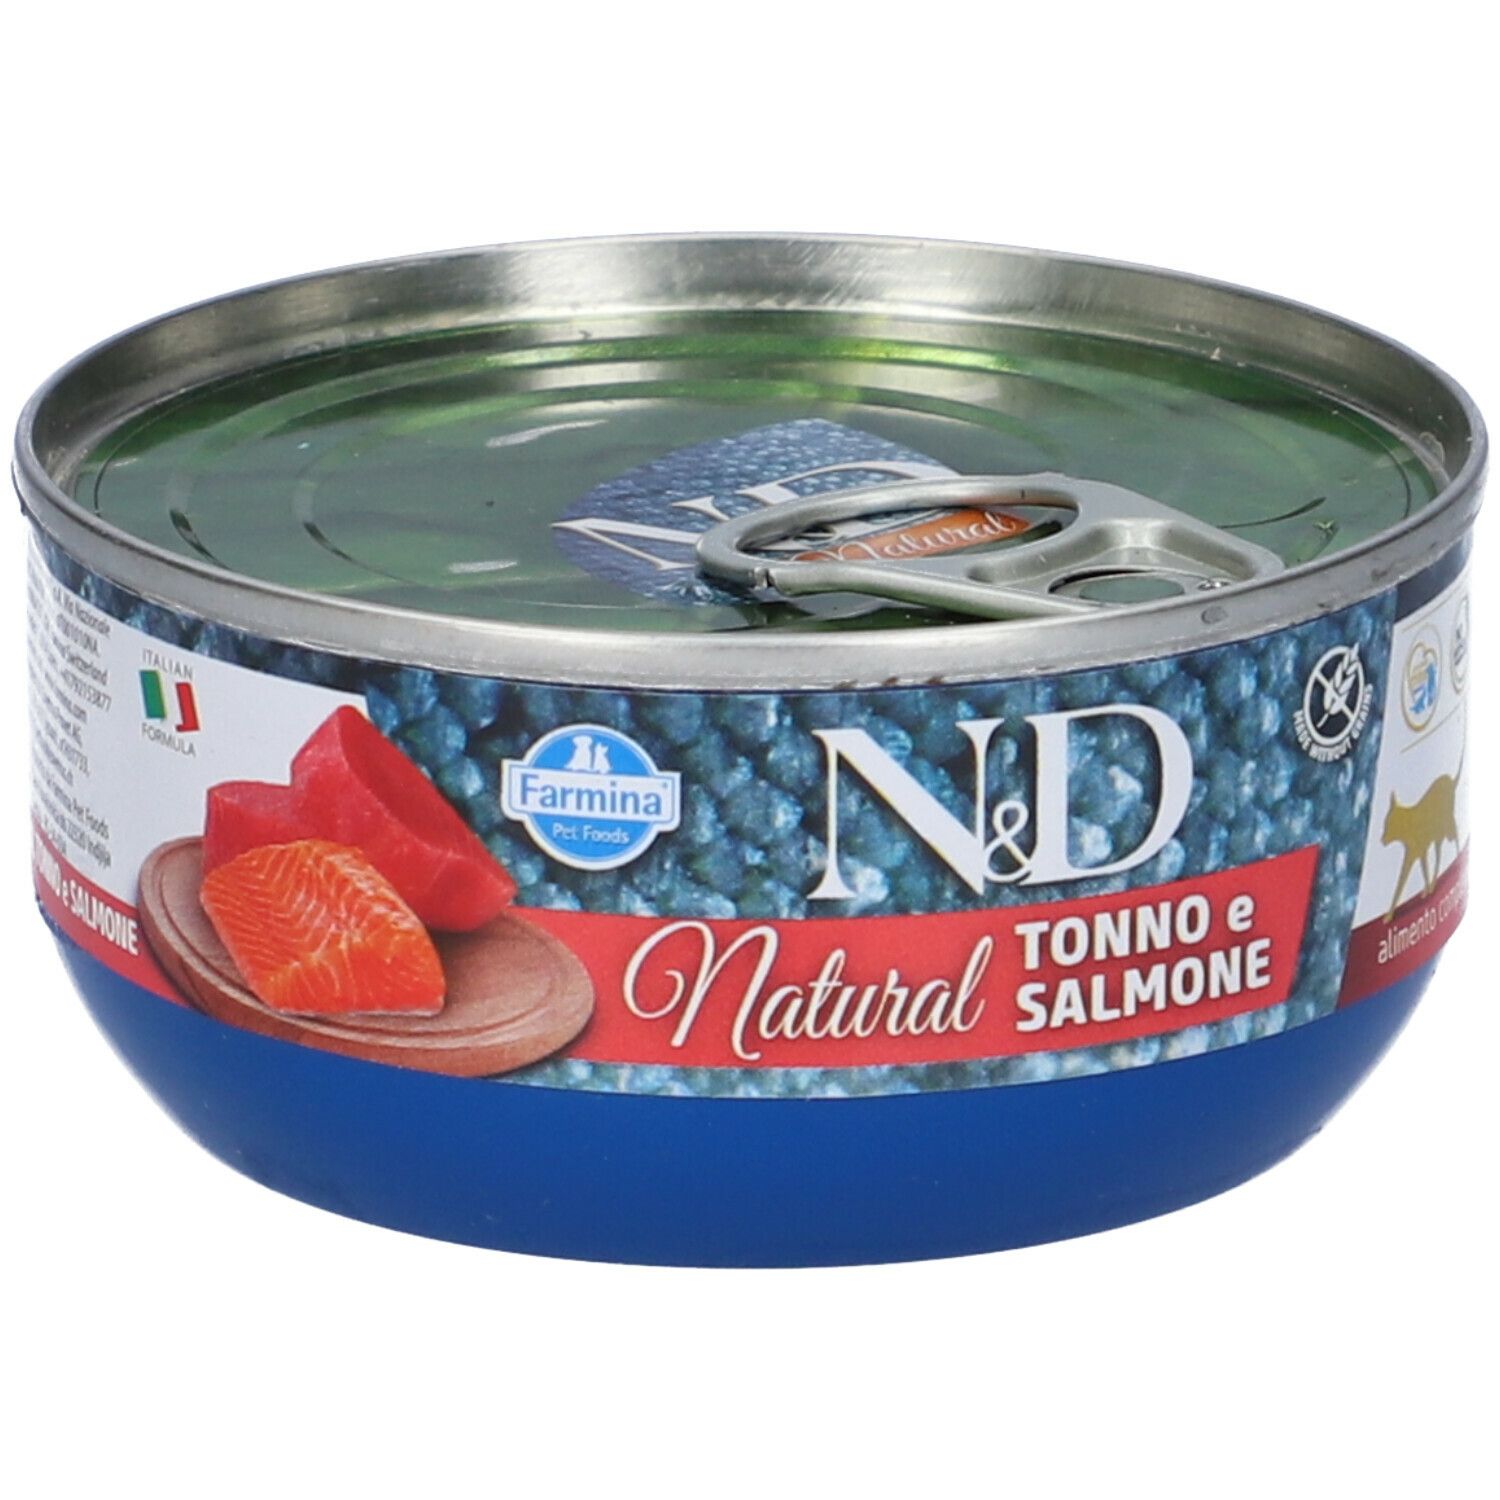 Image of Farmina® N&D Natural Tuna & Salmon Wet Food